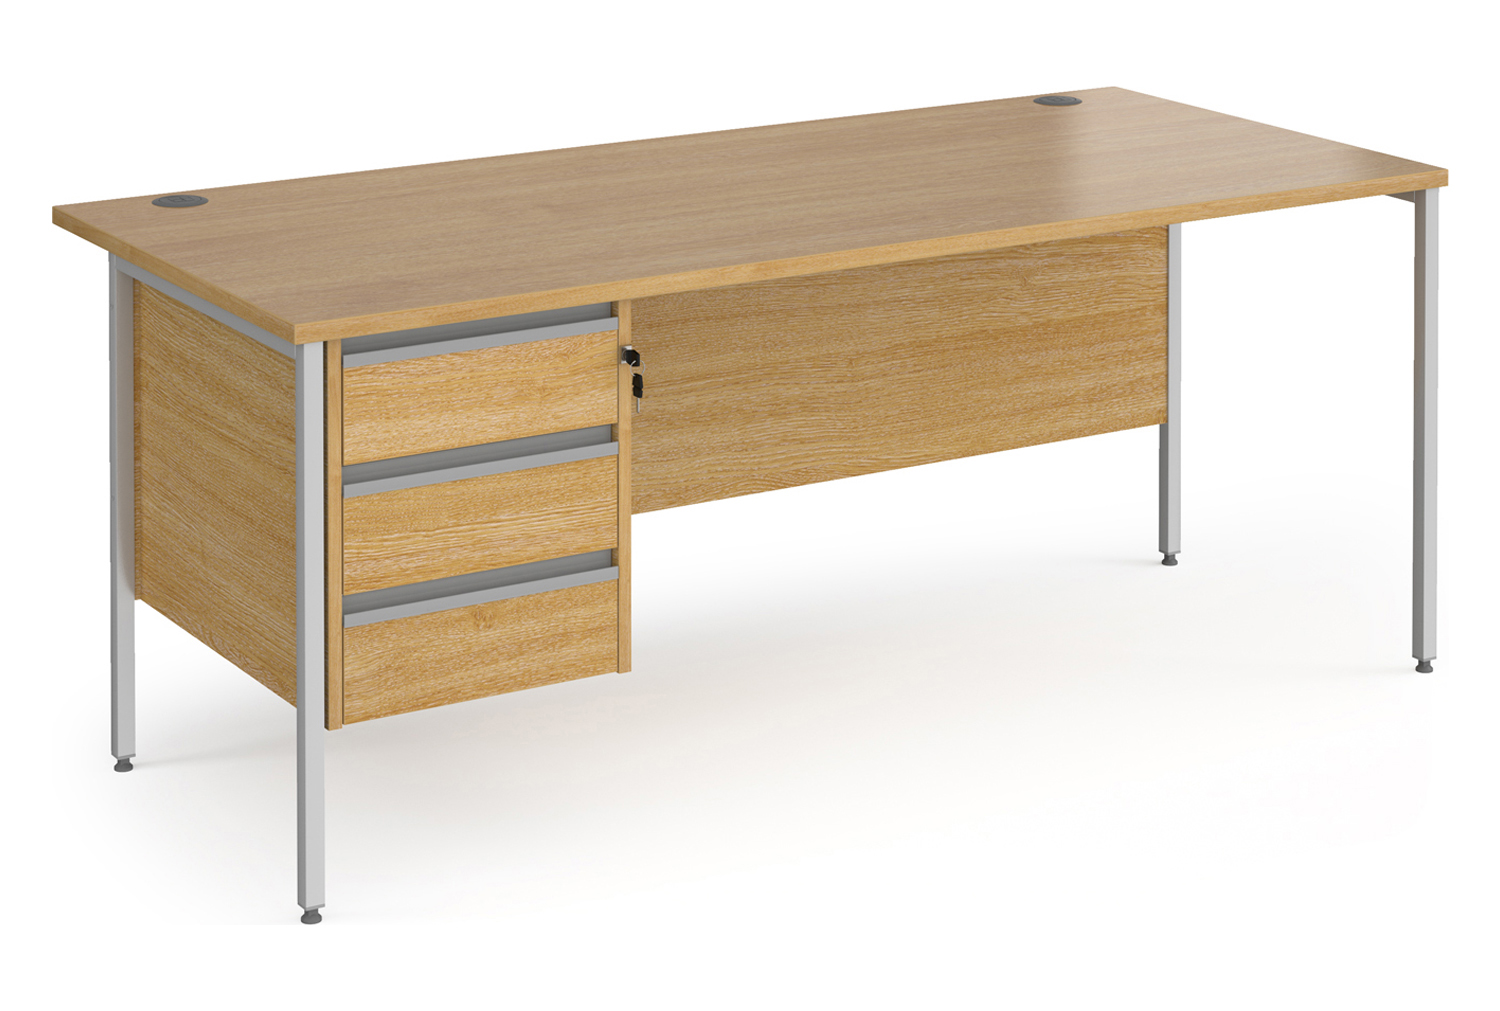 Value Line Classic+ Rectangular H-Leg Office Desk 3 Drawers (Silver Leg), 180wx80dx73h (cm), Oak, Express Delivery